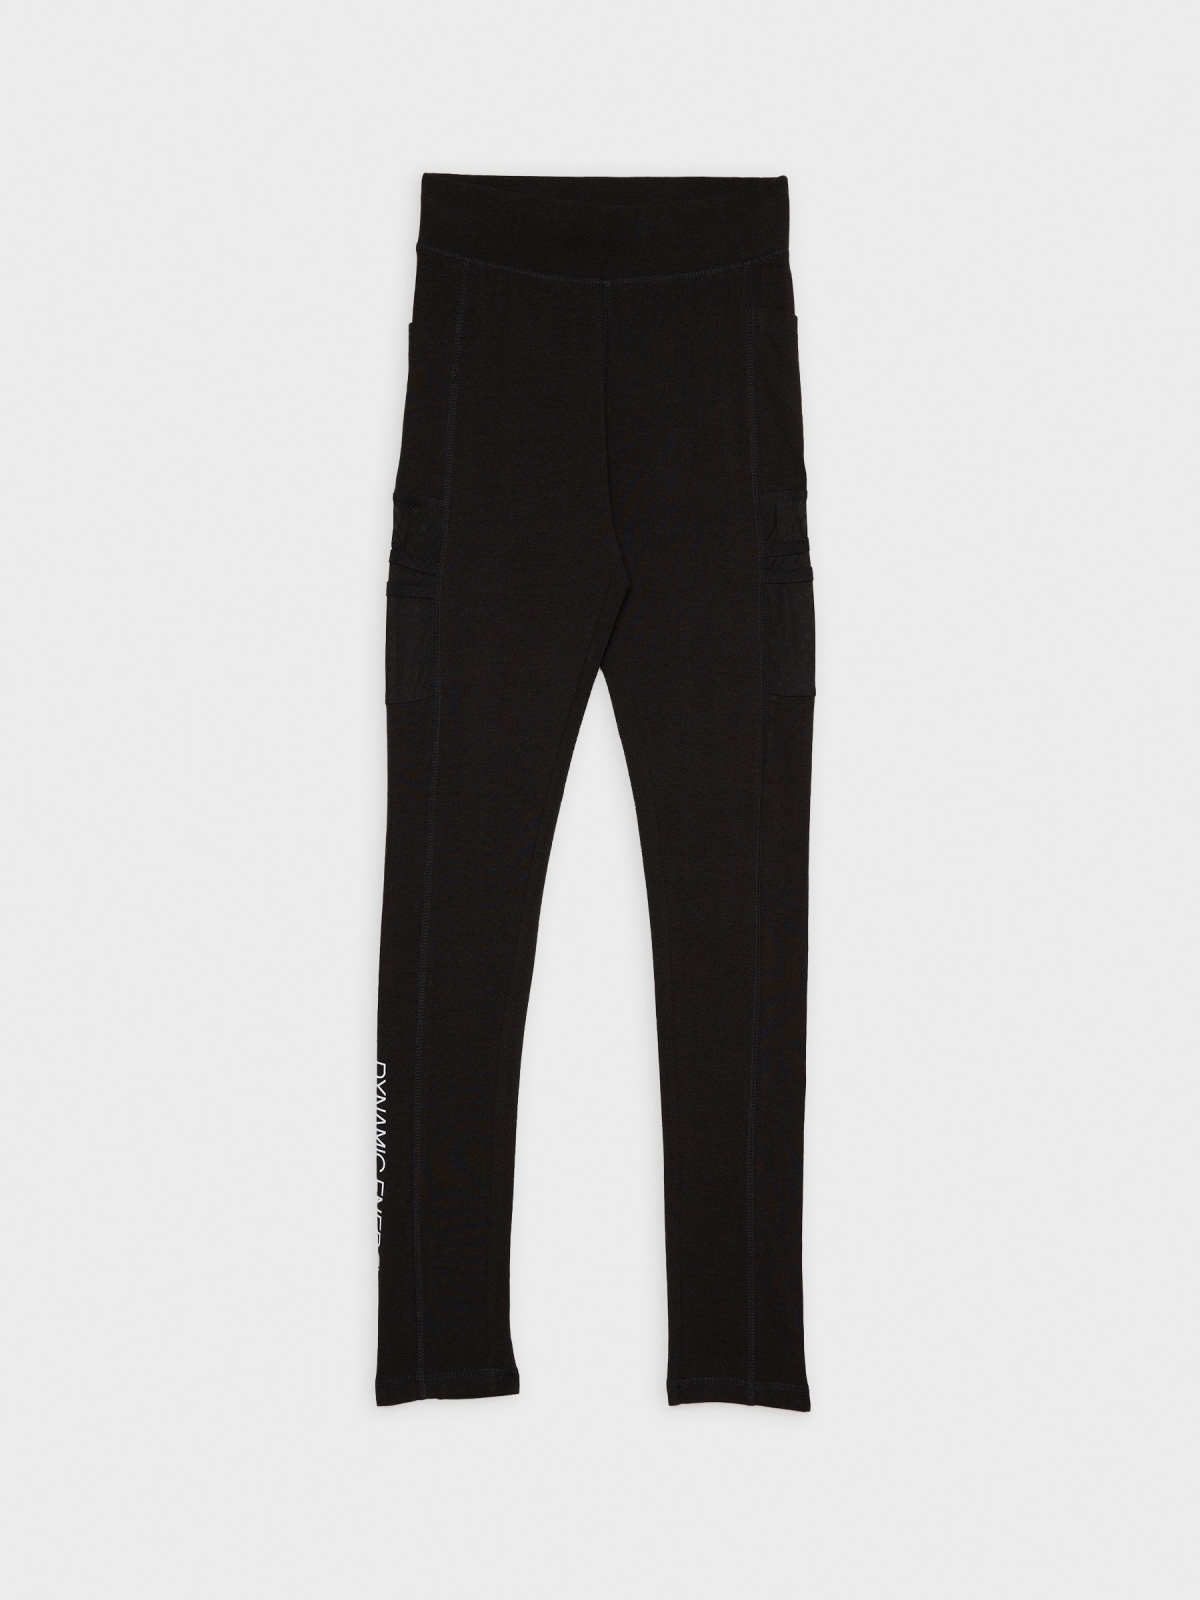  Combined mesh leggings black